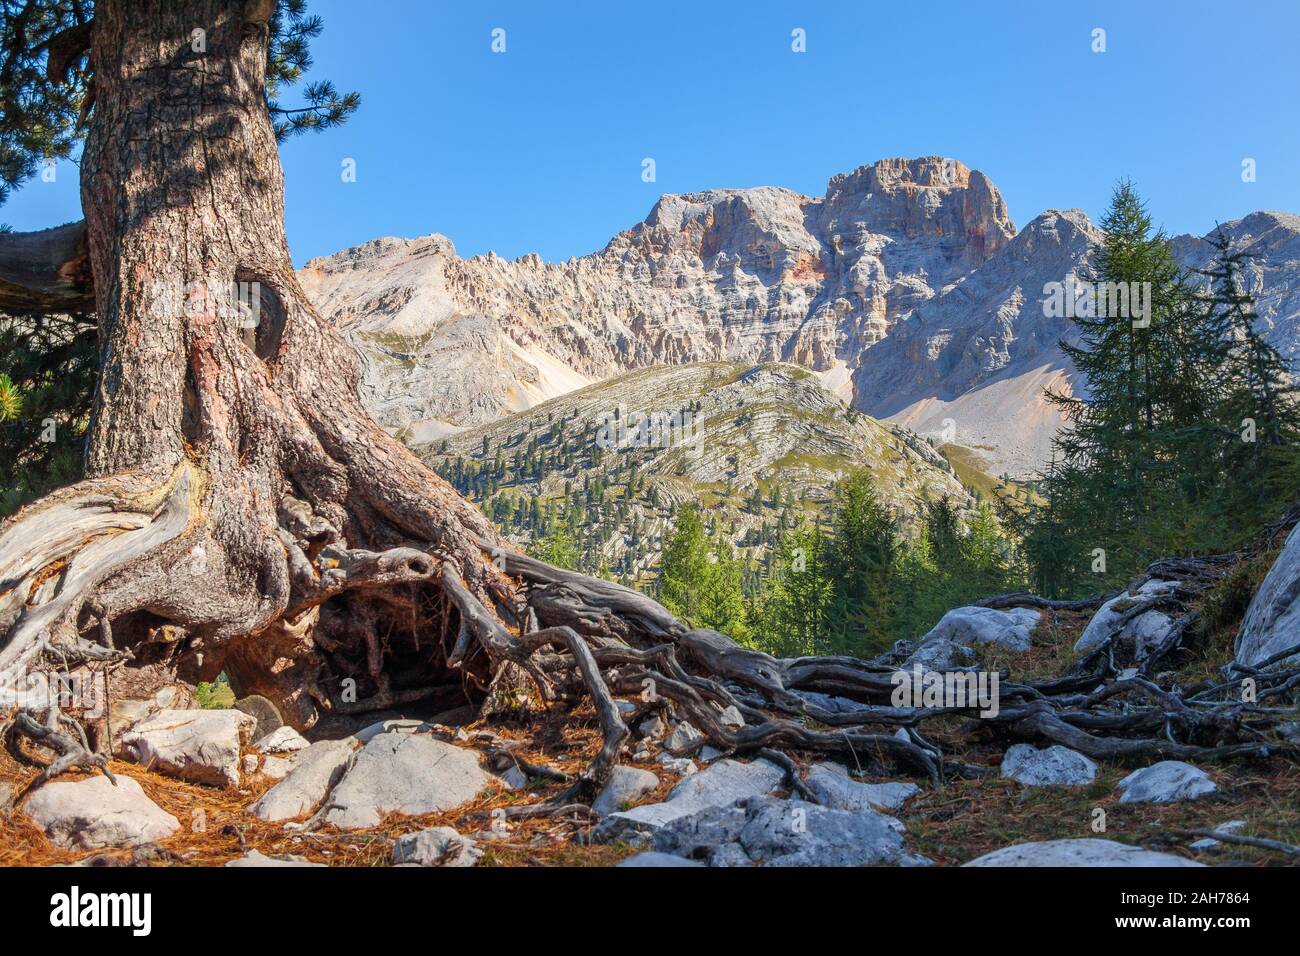 Pinus cembra centenary tree. Woodland near Ra Stua. View on Croda Rossa peak. The Natural Park of the Ampezzo Dolomites. Italian Alps. Europe. Stock Photo